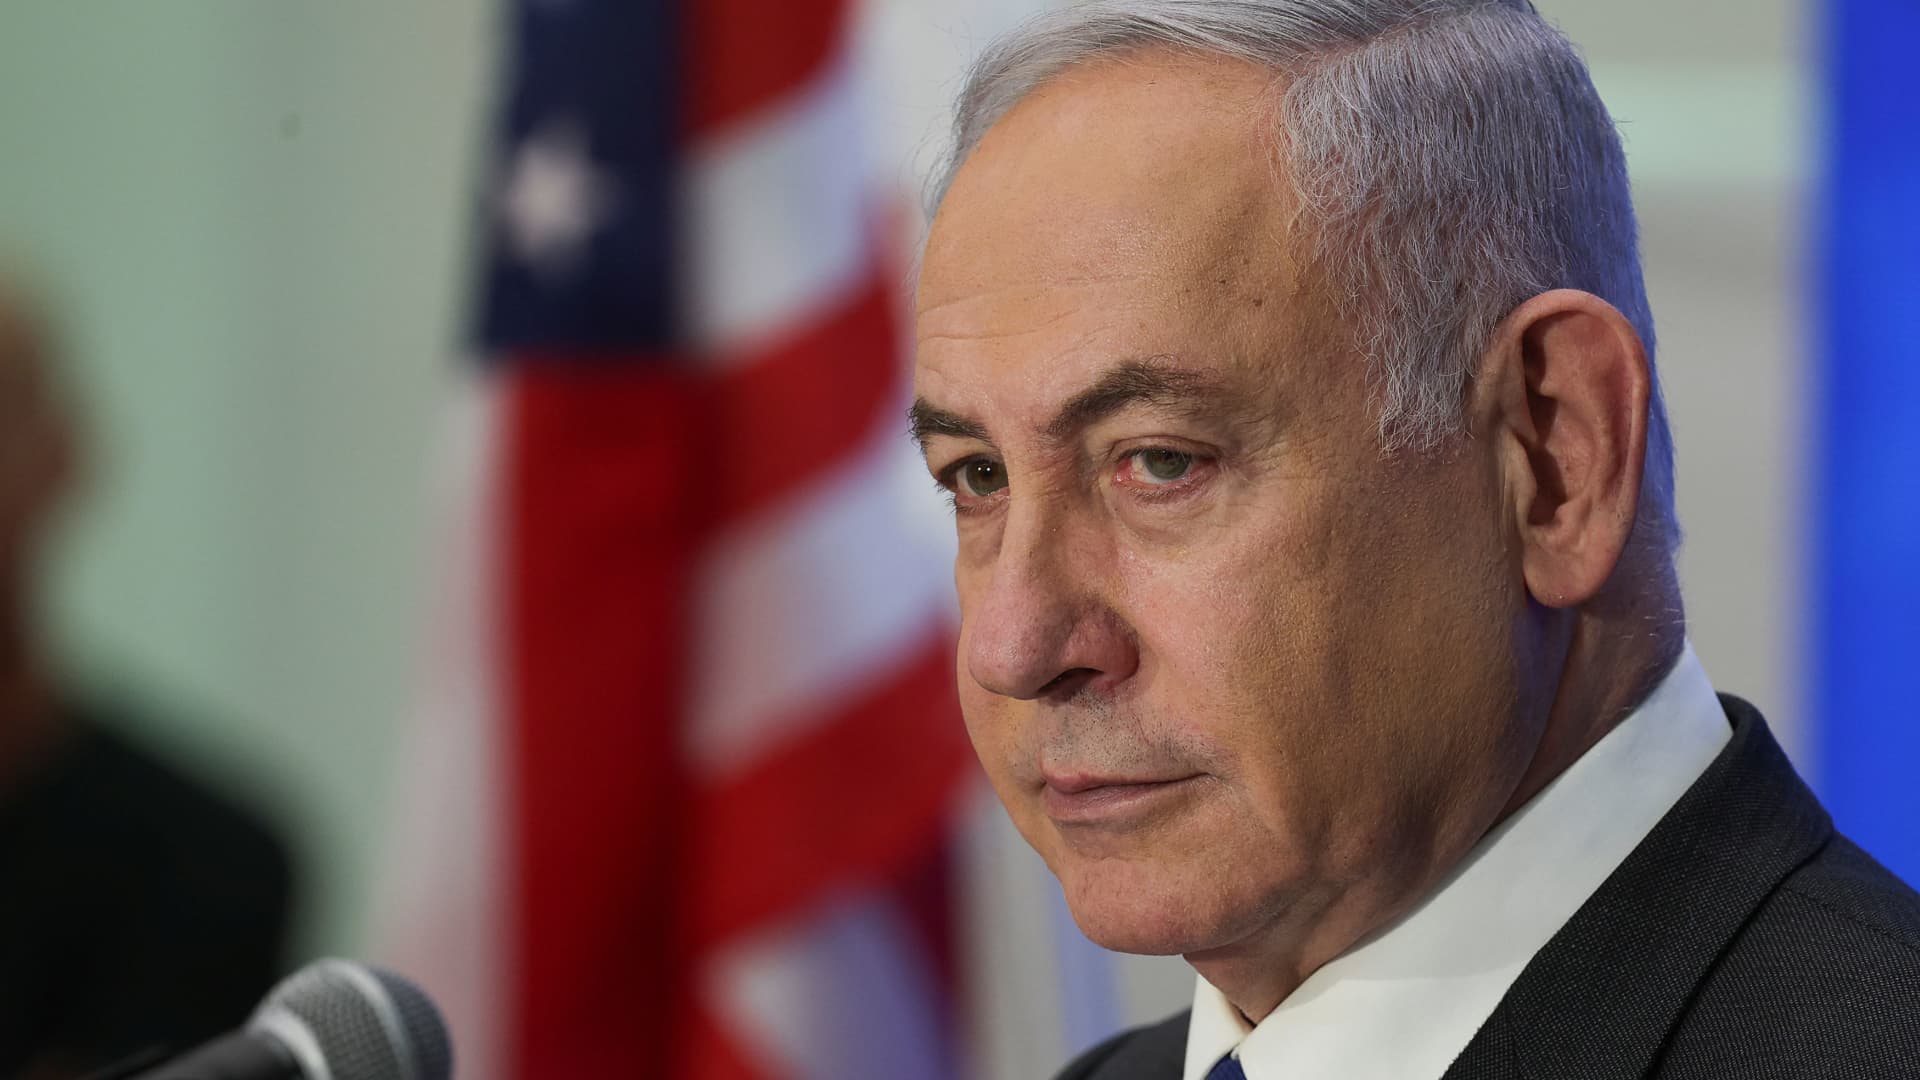 Israeli Prime Minister Netanyahu is set to undergo hernia surgery